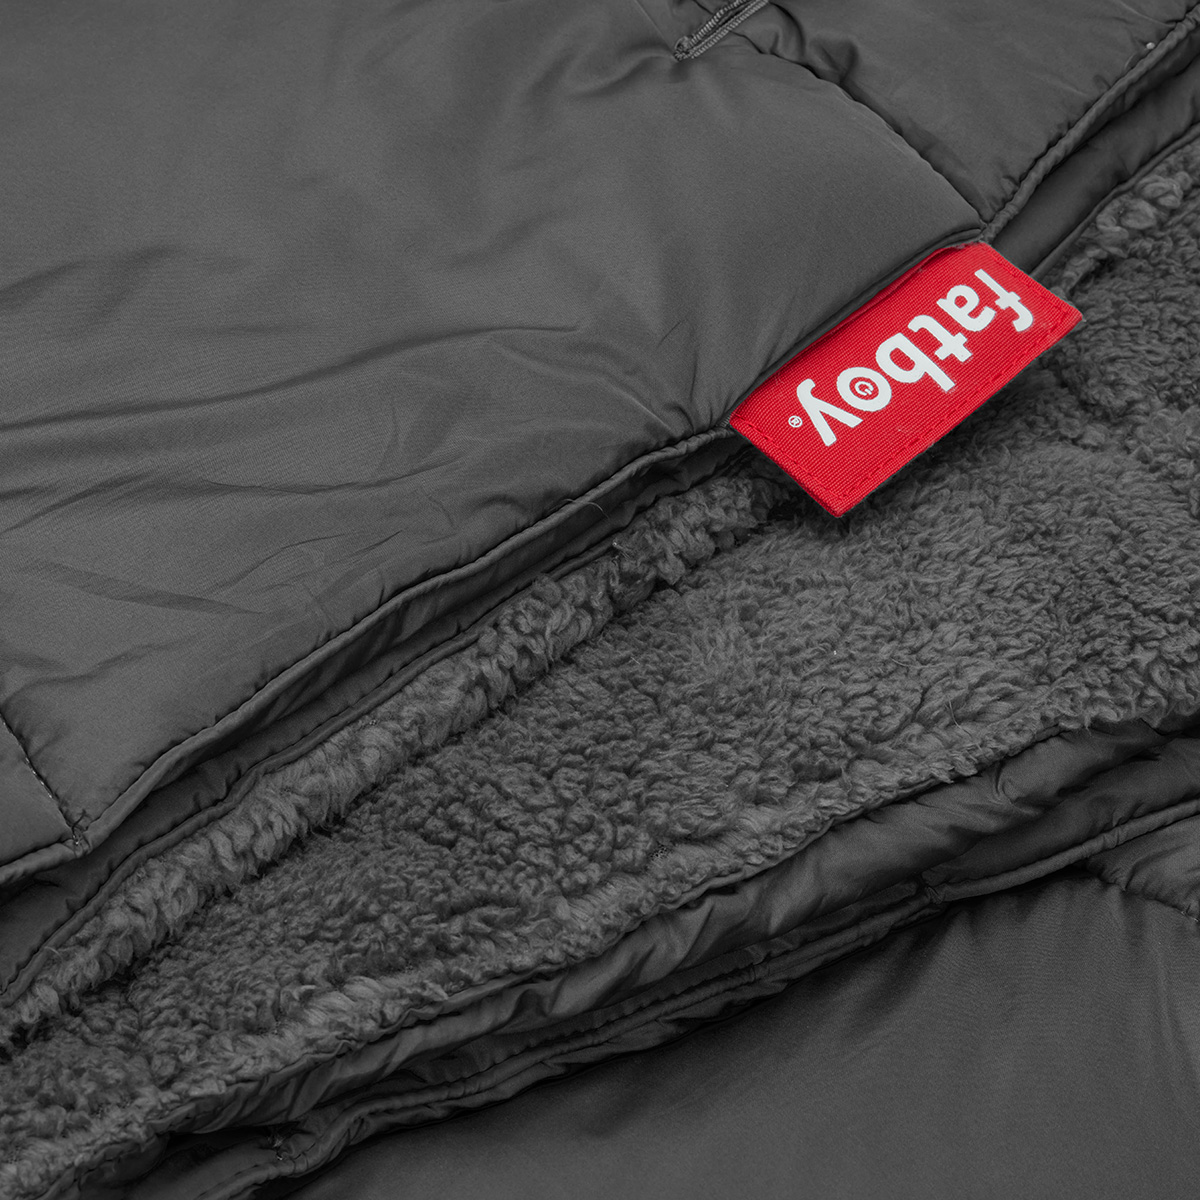 Fatboy® hotspot blanket cool grey